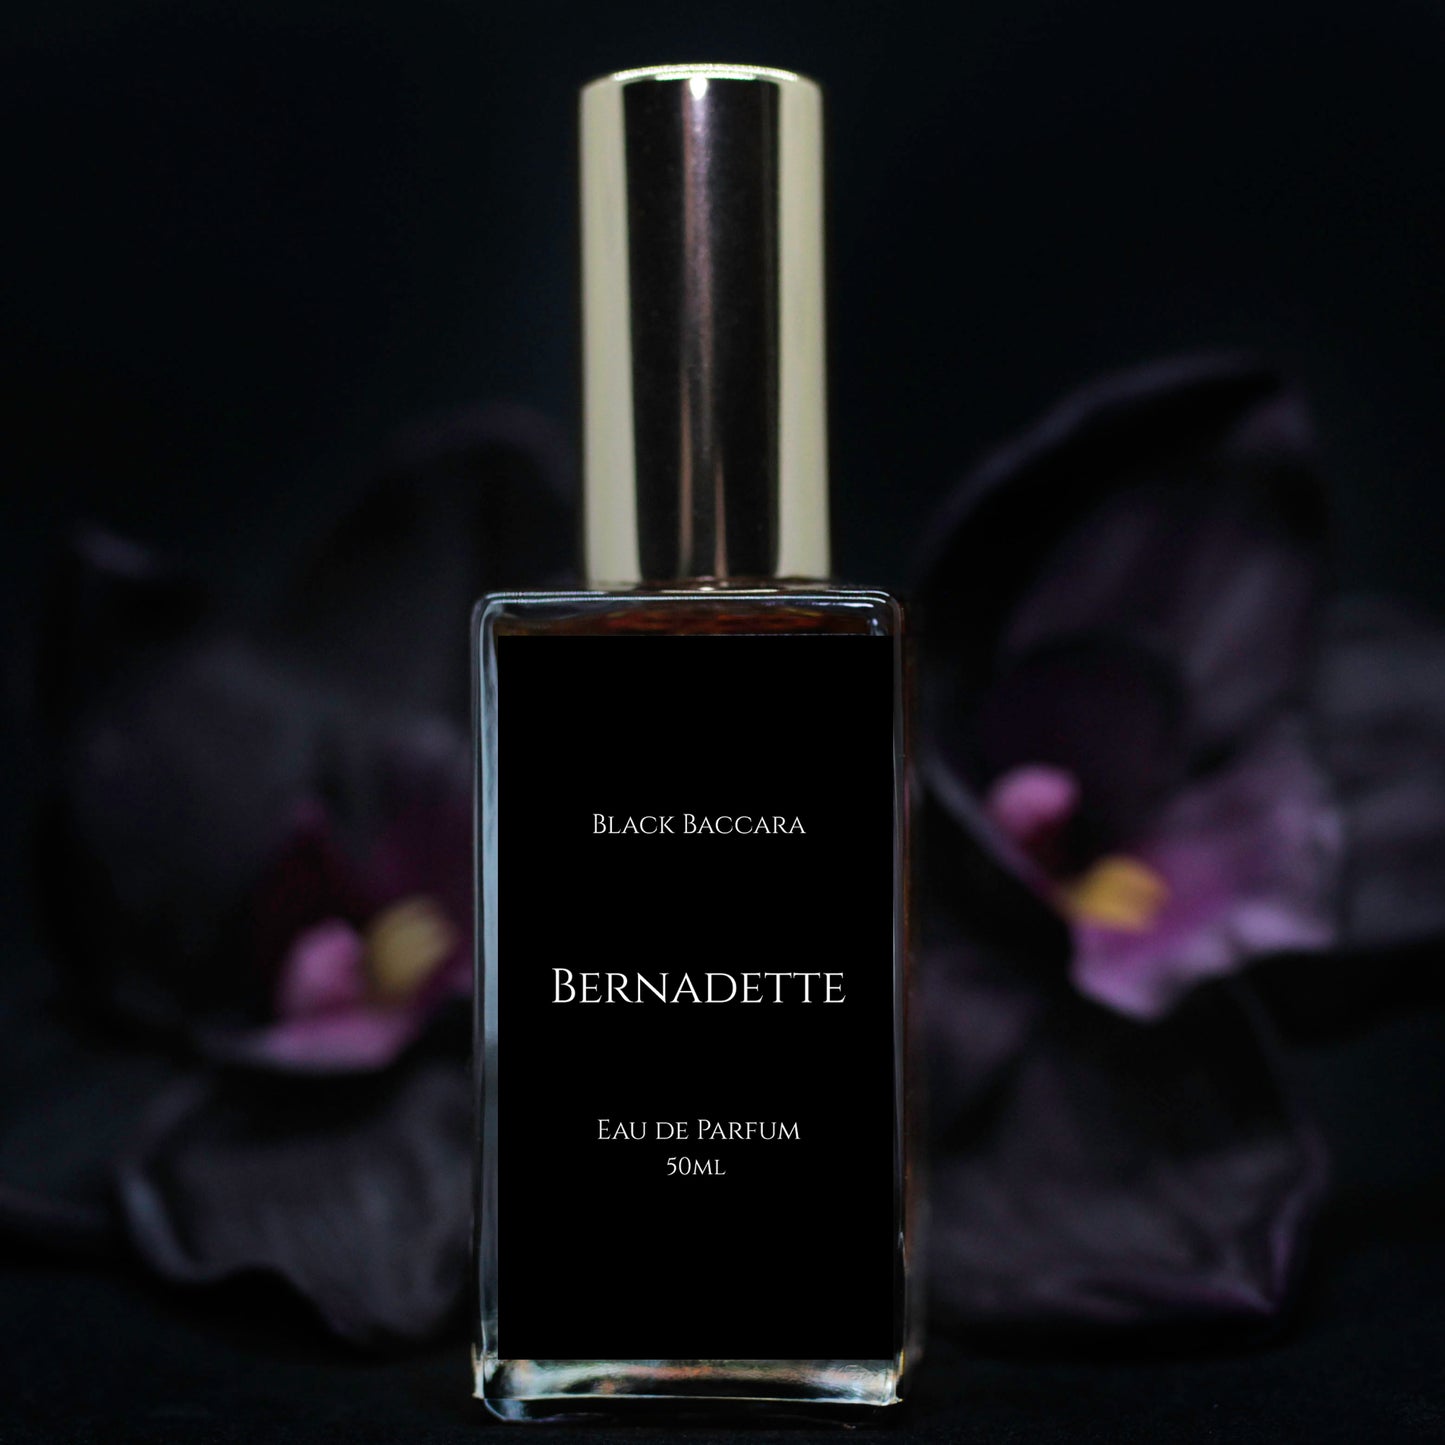 Bernadette. Church inspired perfume.